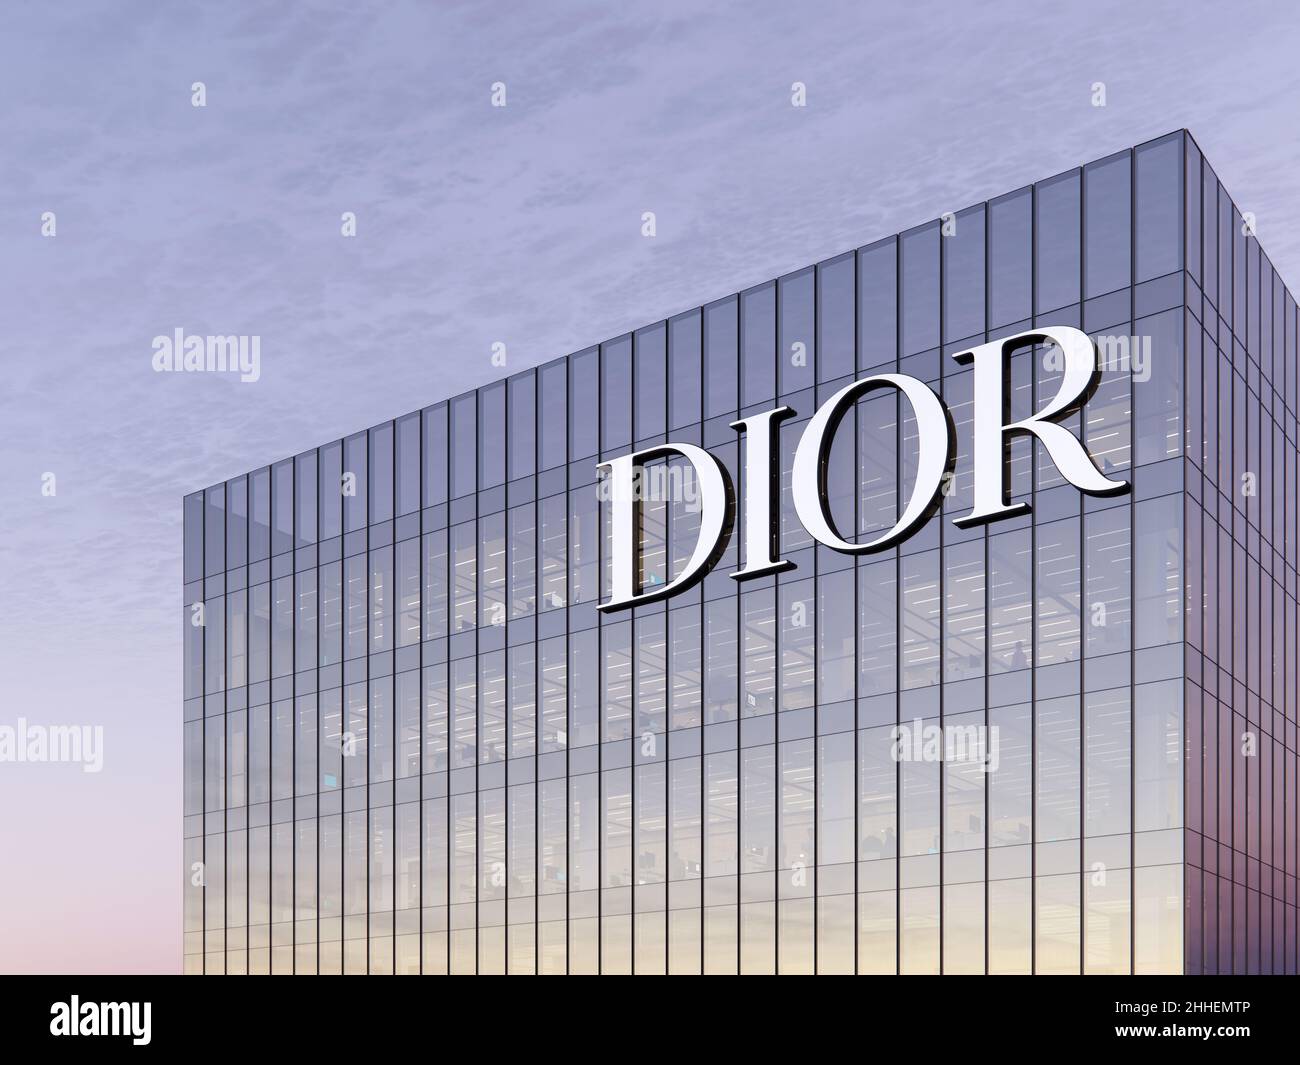 Dior, Office